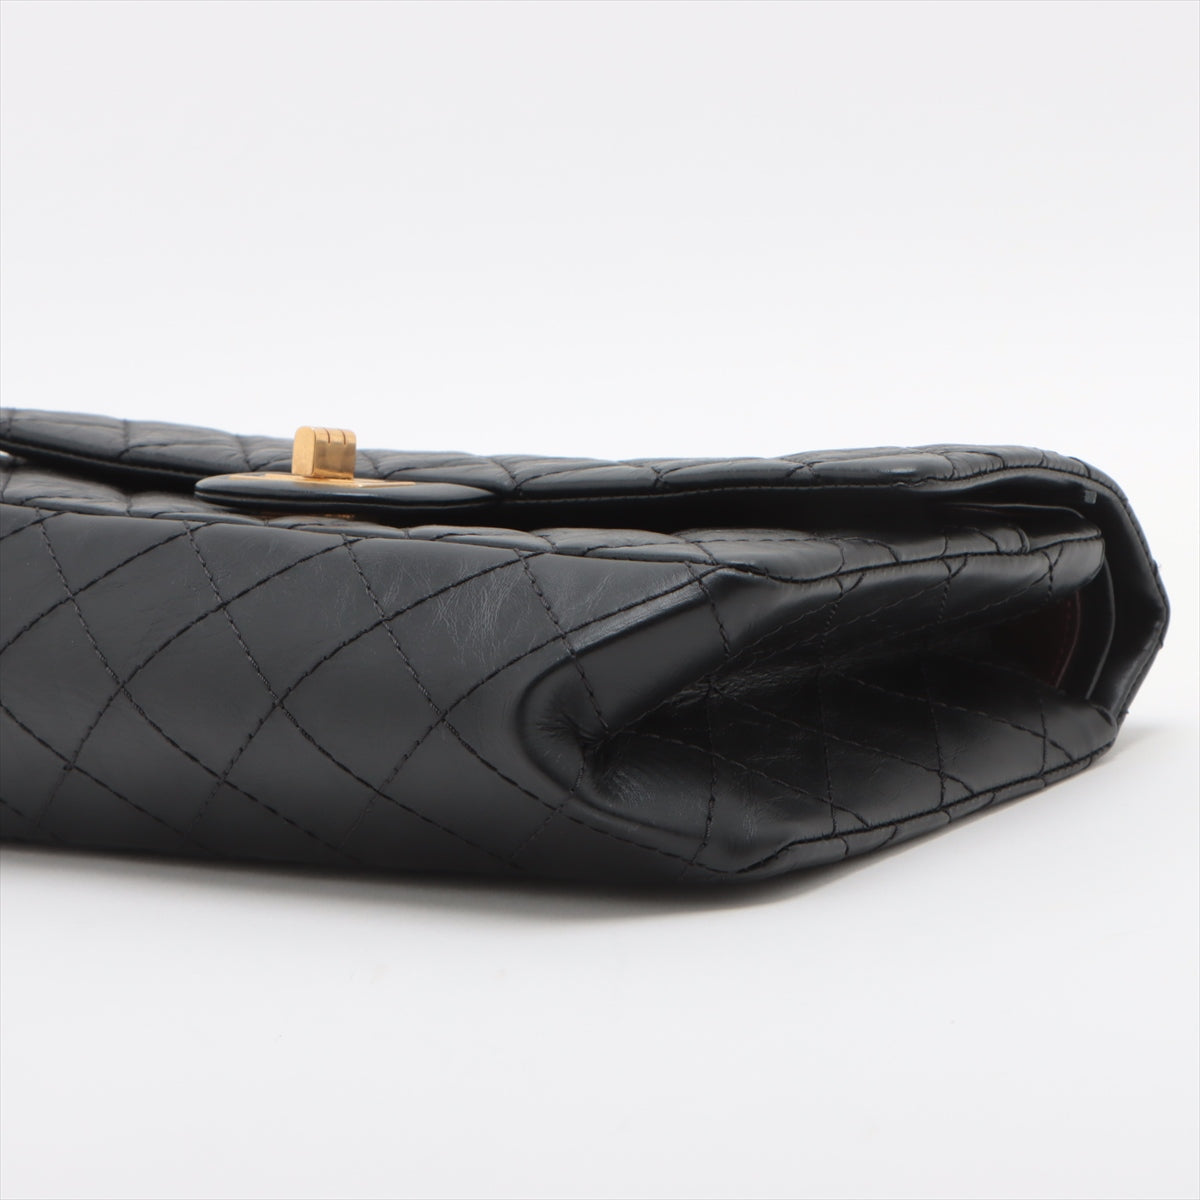 Chanel Matelasse 2.55 Vintage calf Double Flap Double Chain Bag Black Gold Metal Fittings 21XXXXXX A37586